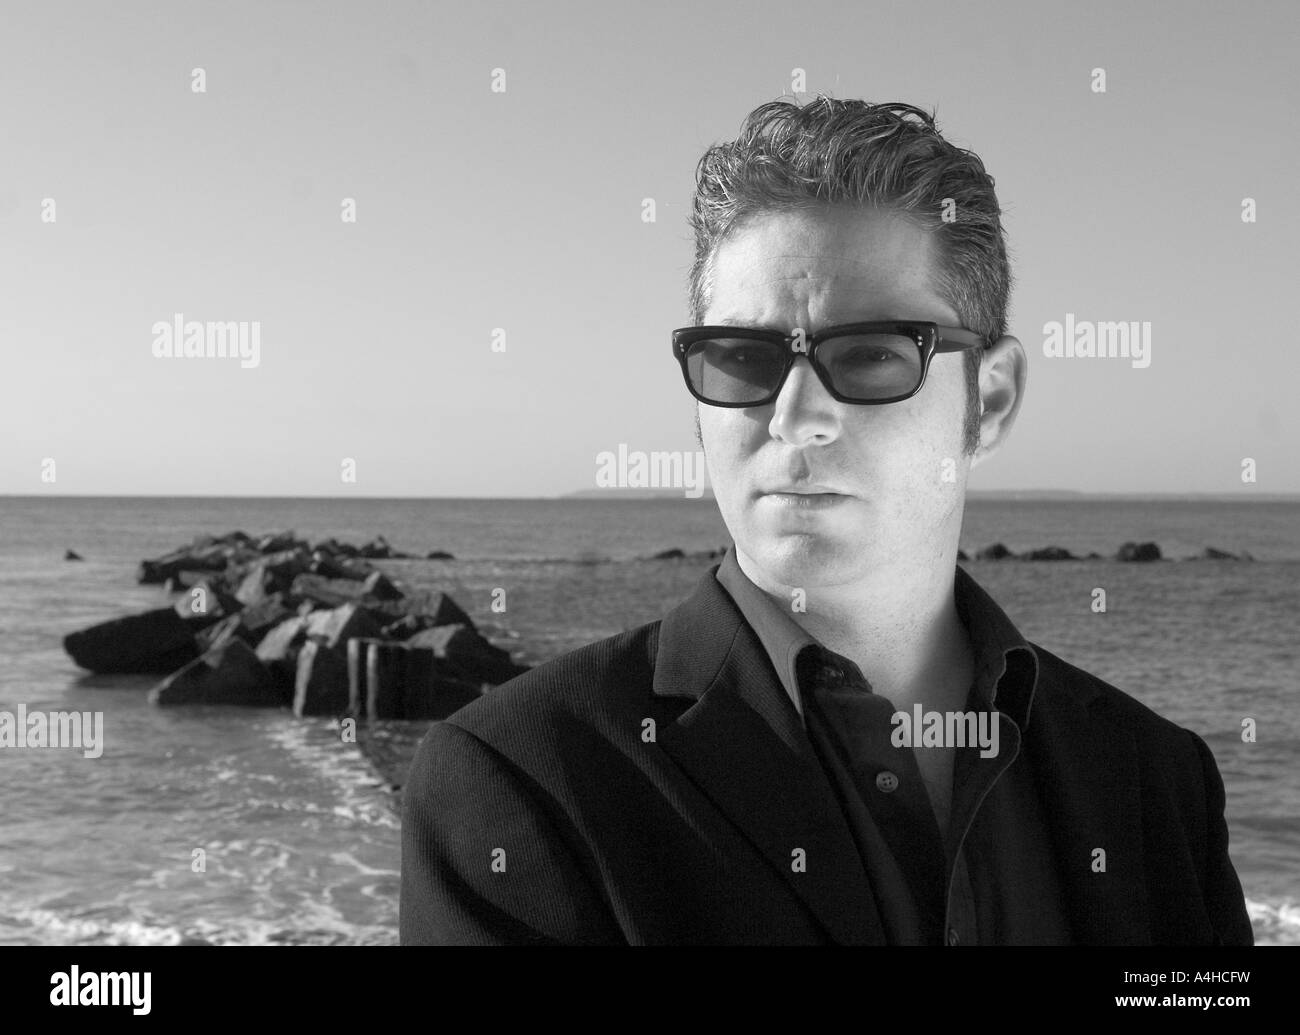 man in sunglasses on beach Stock Photo